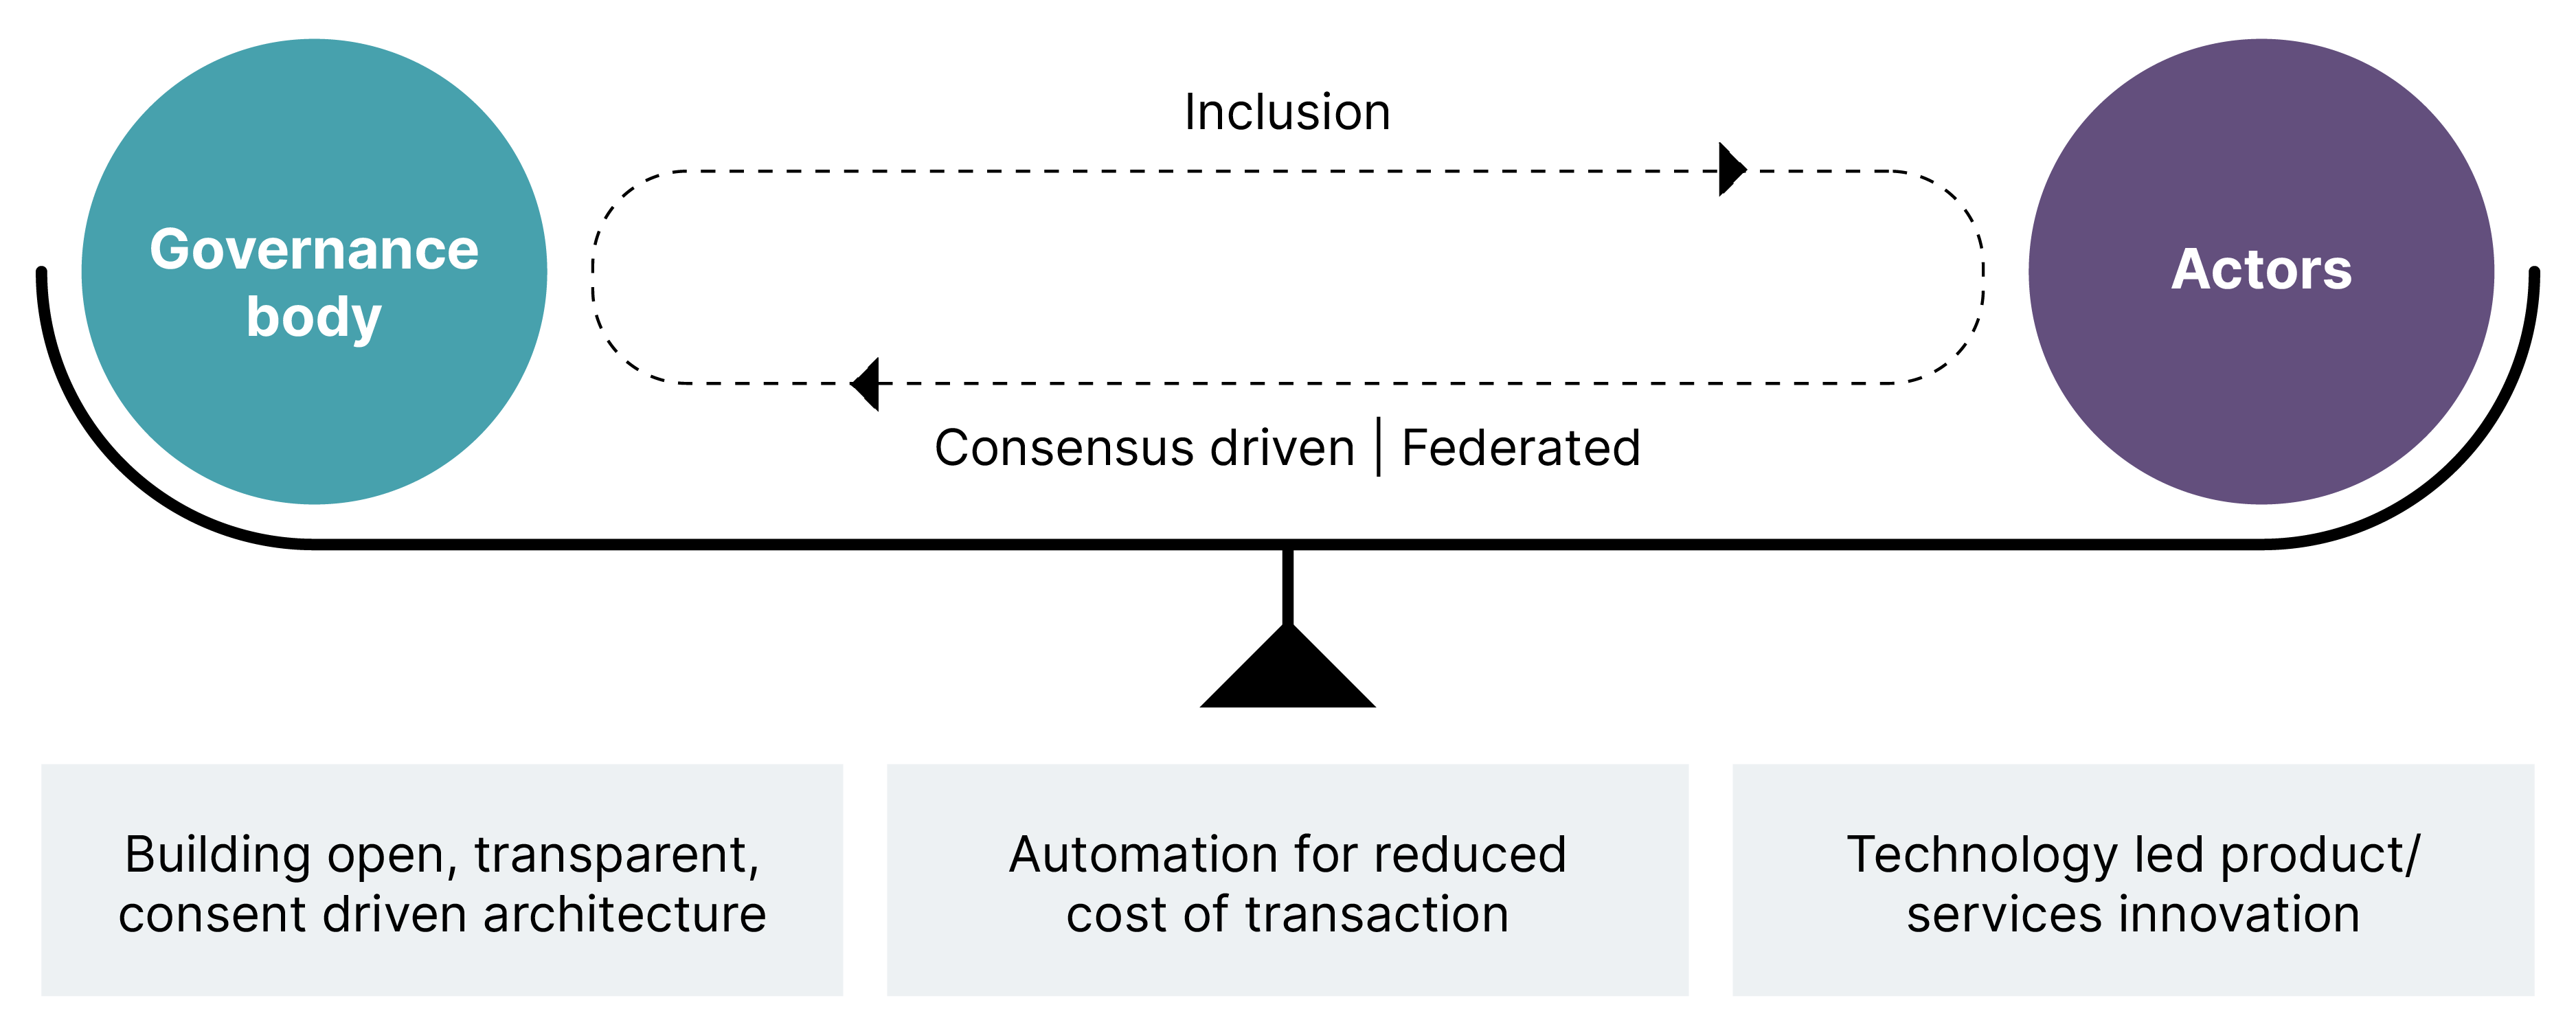 Protocol-based ecosystem model